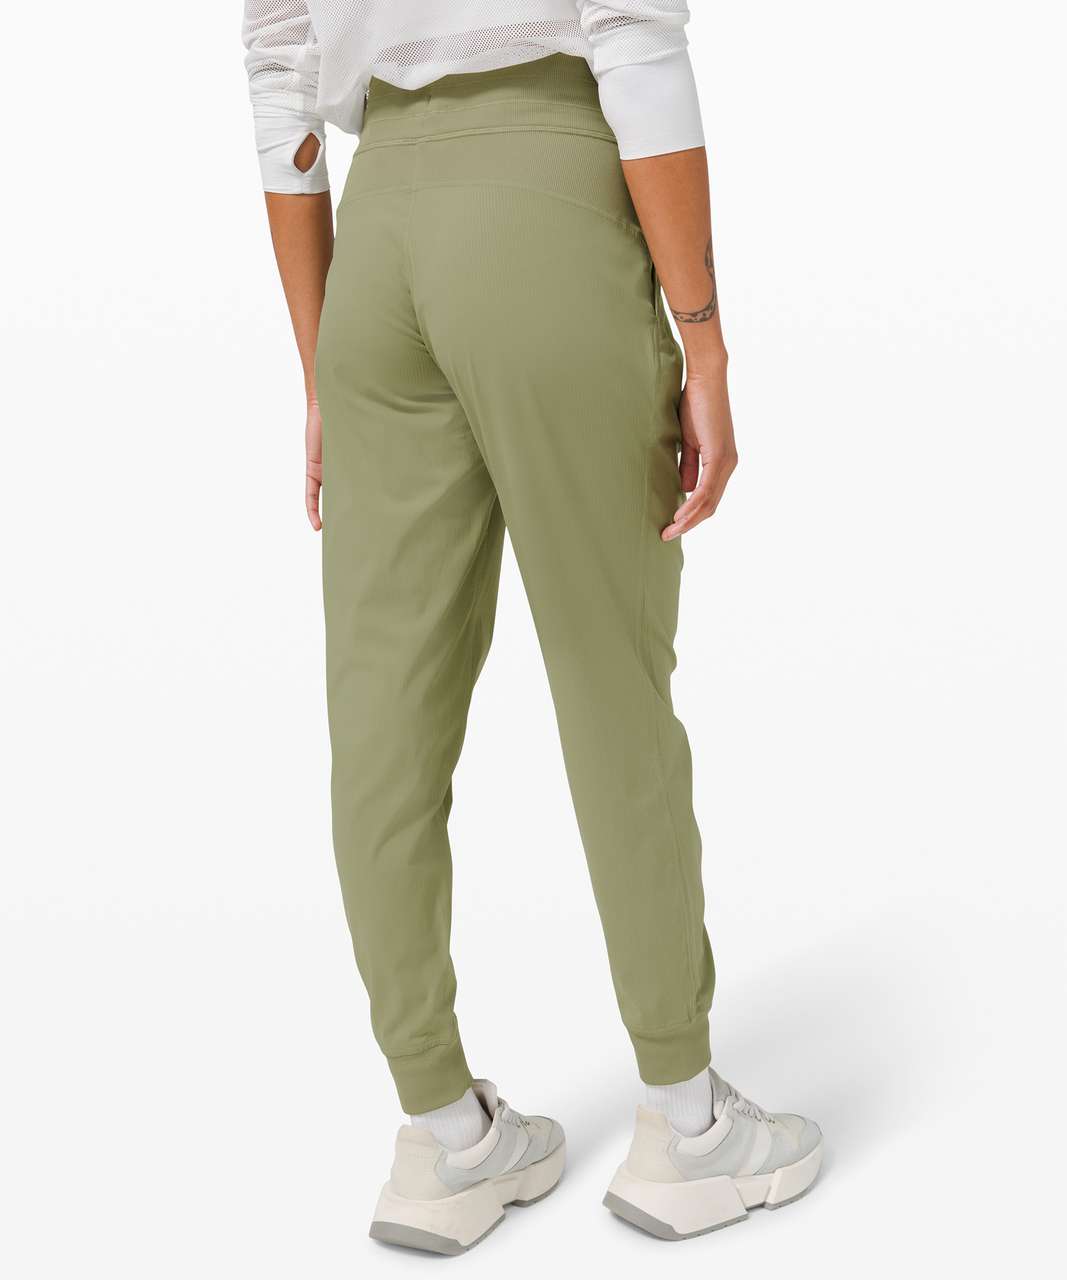 Lululemon Women's Pants Size 8 Olive Green Vintage Dance Jogger